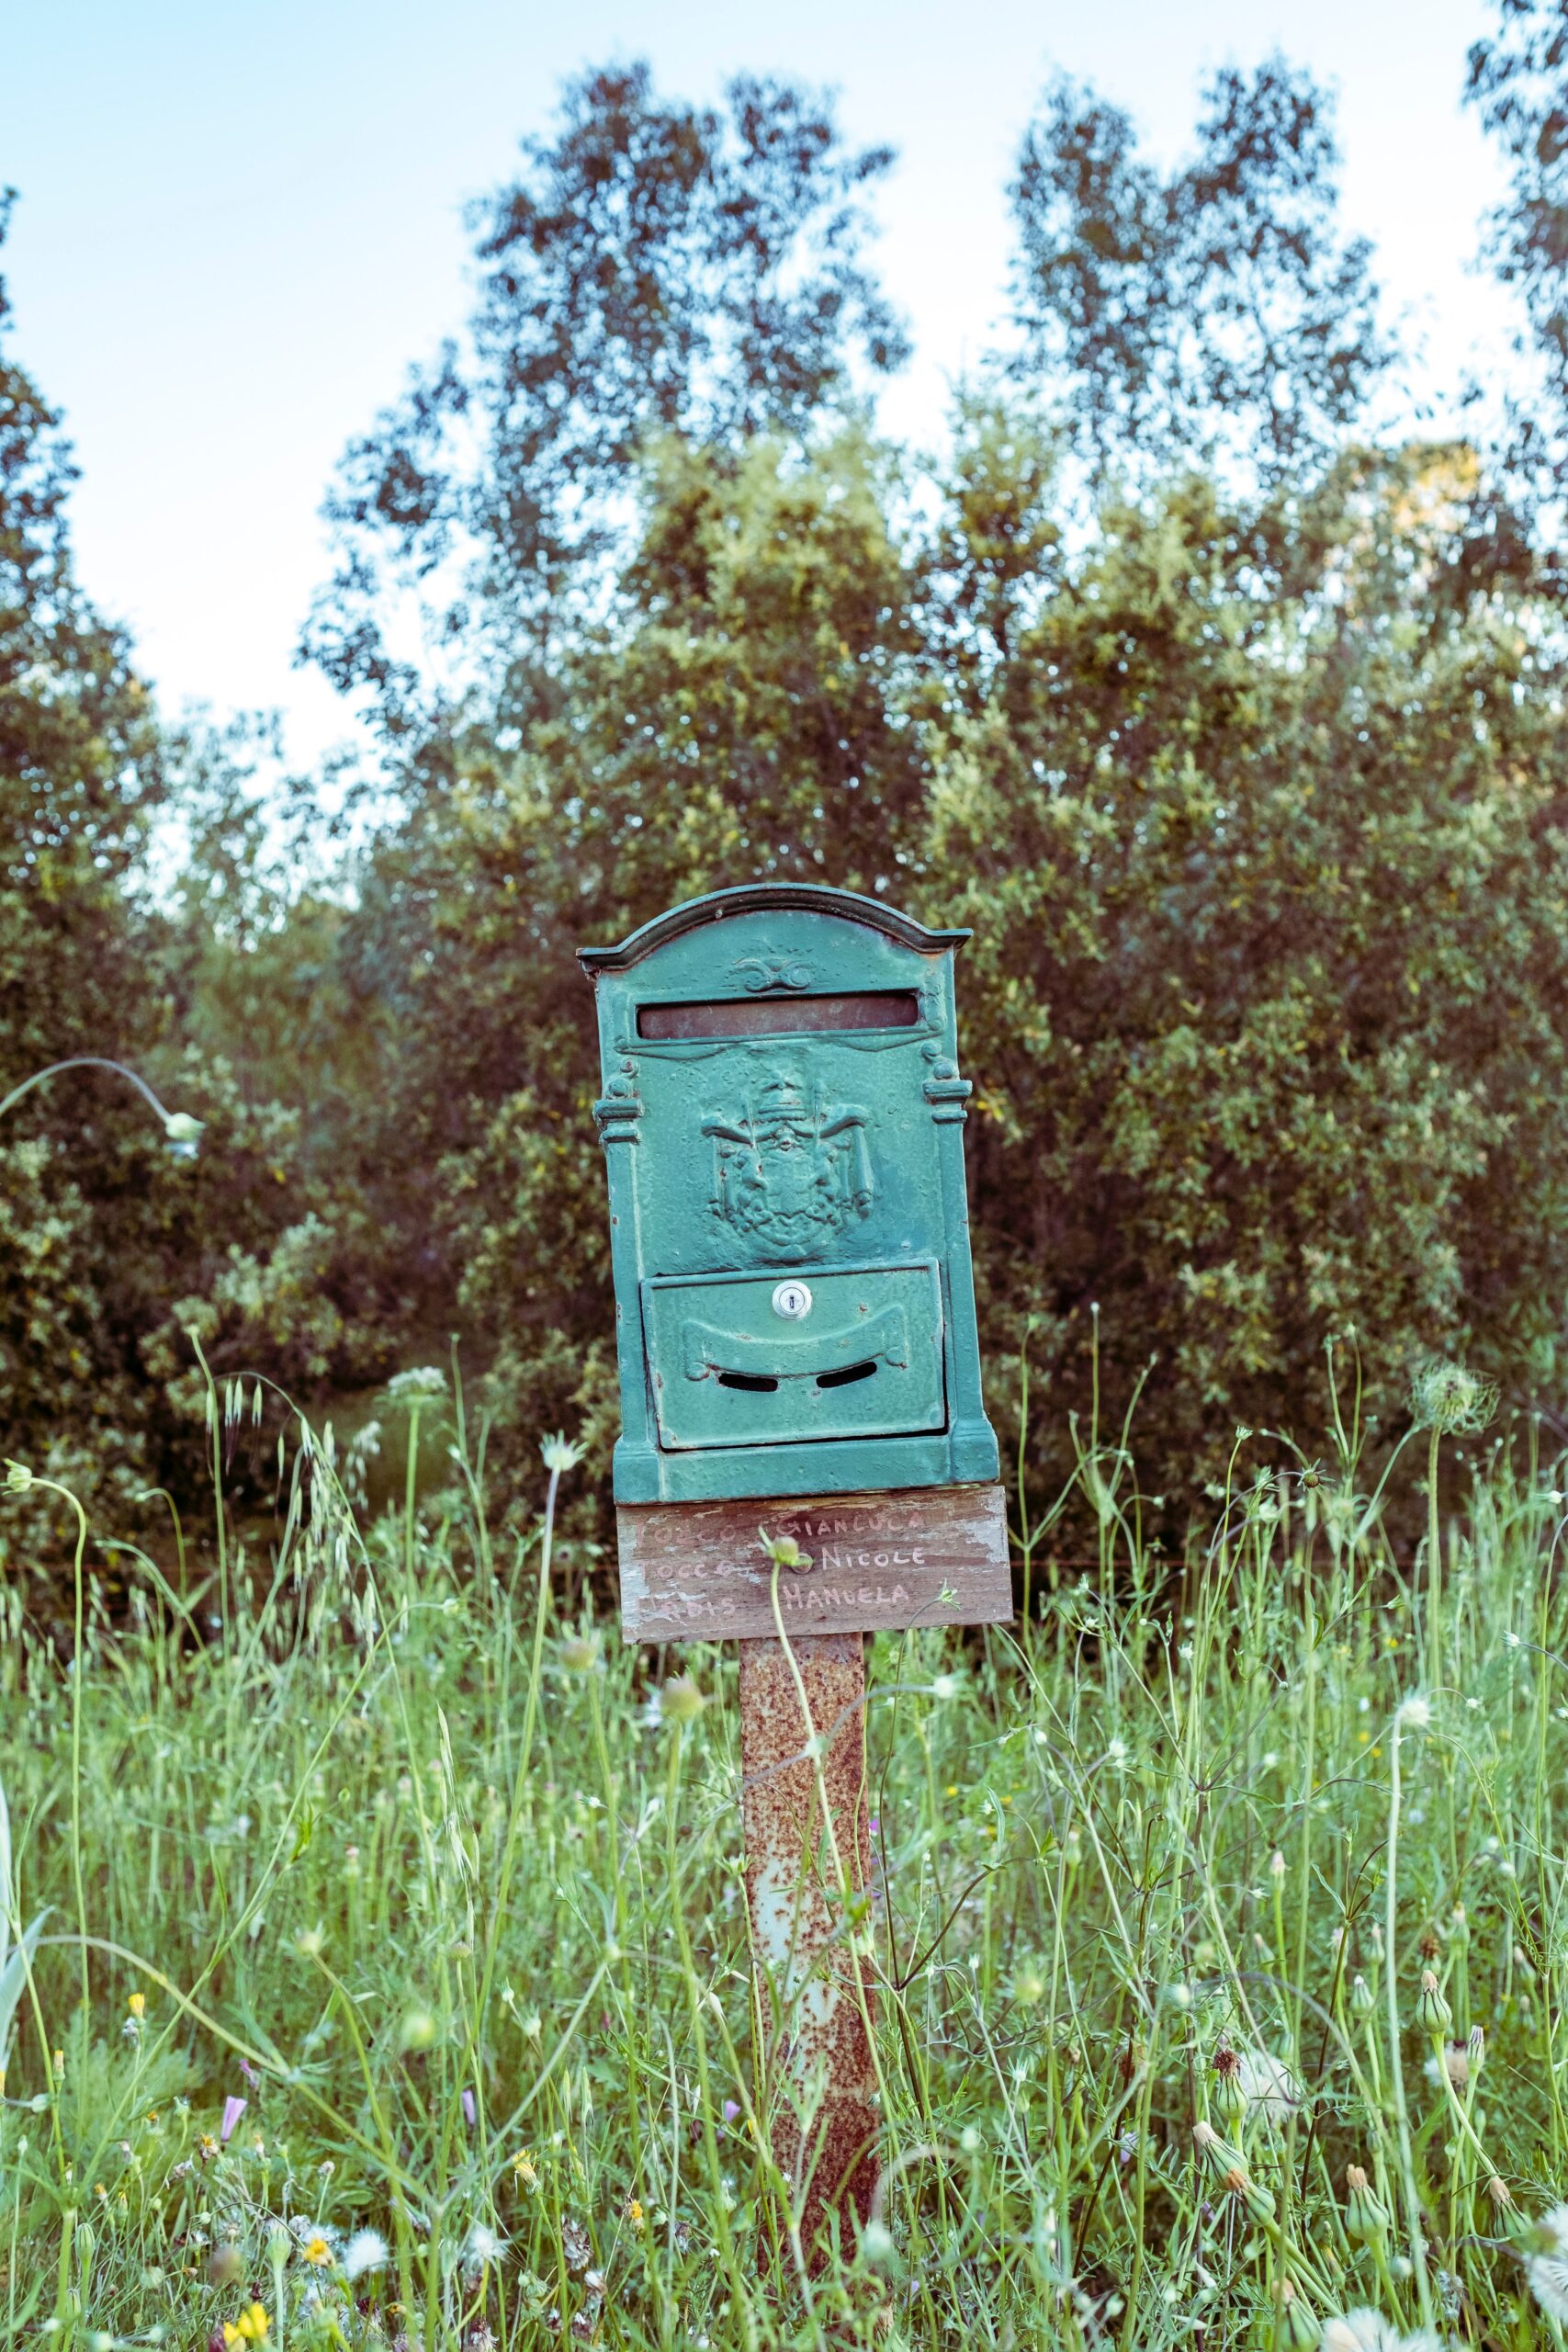 Teal mailbox